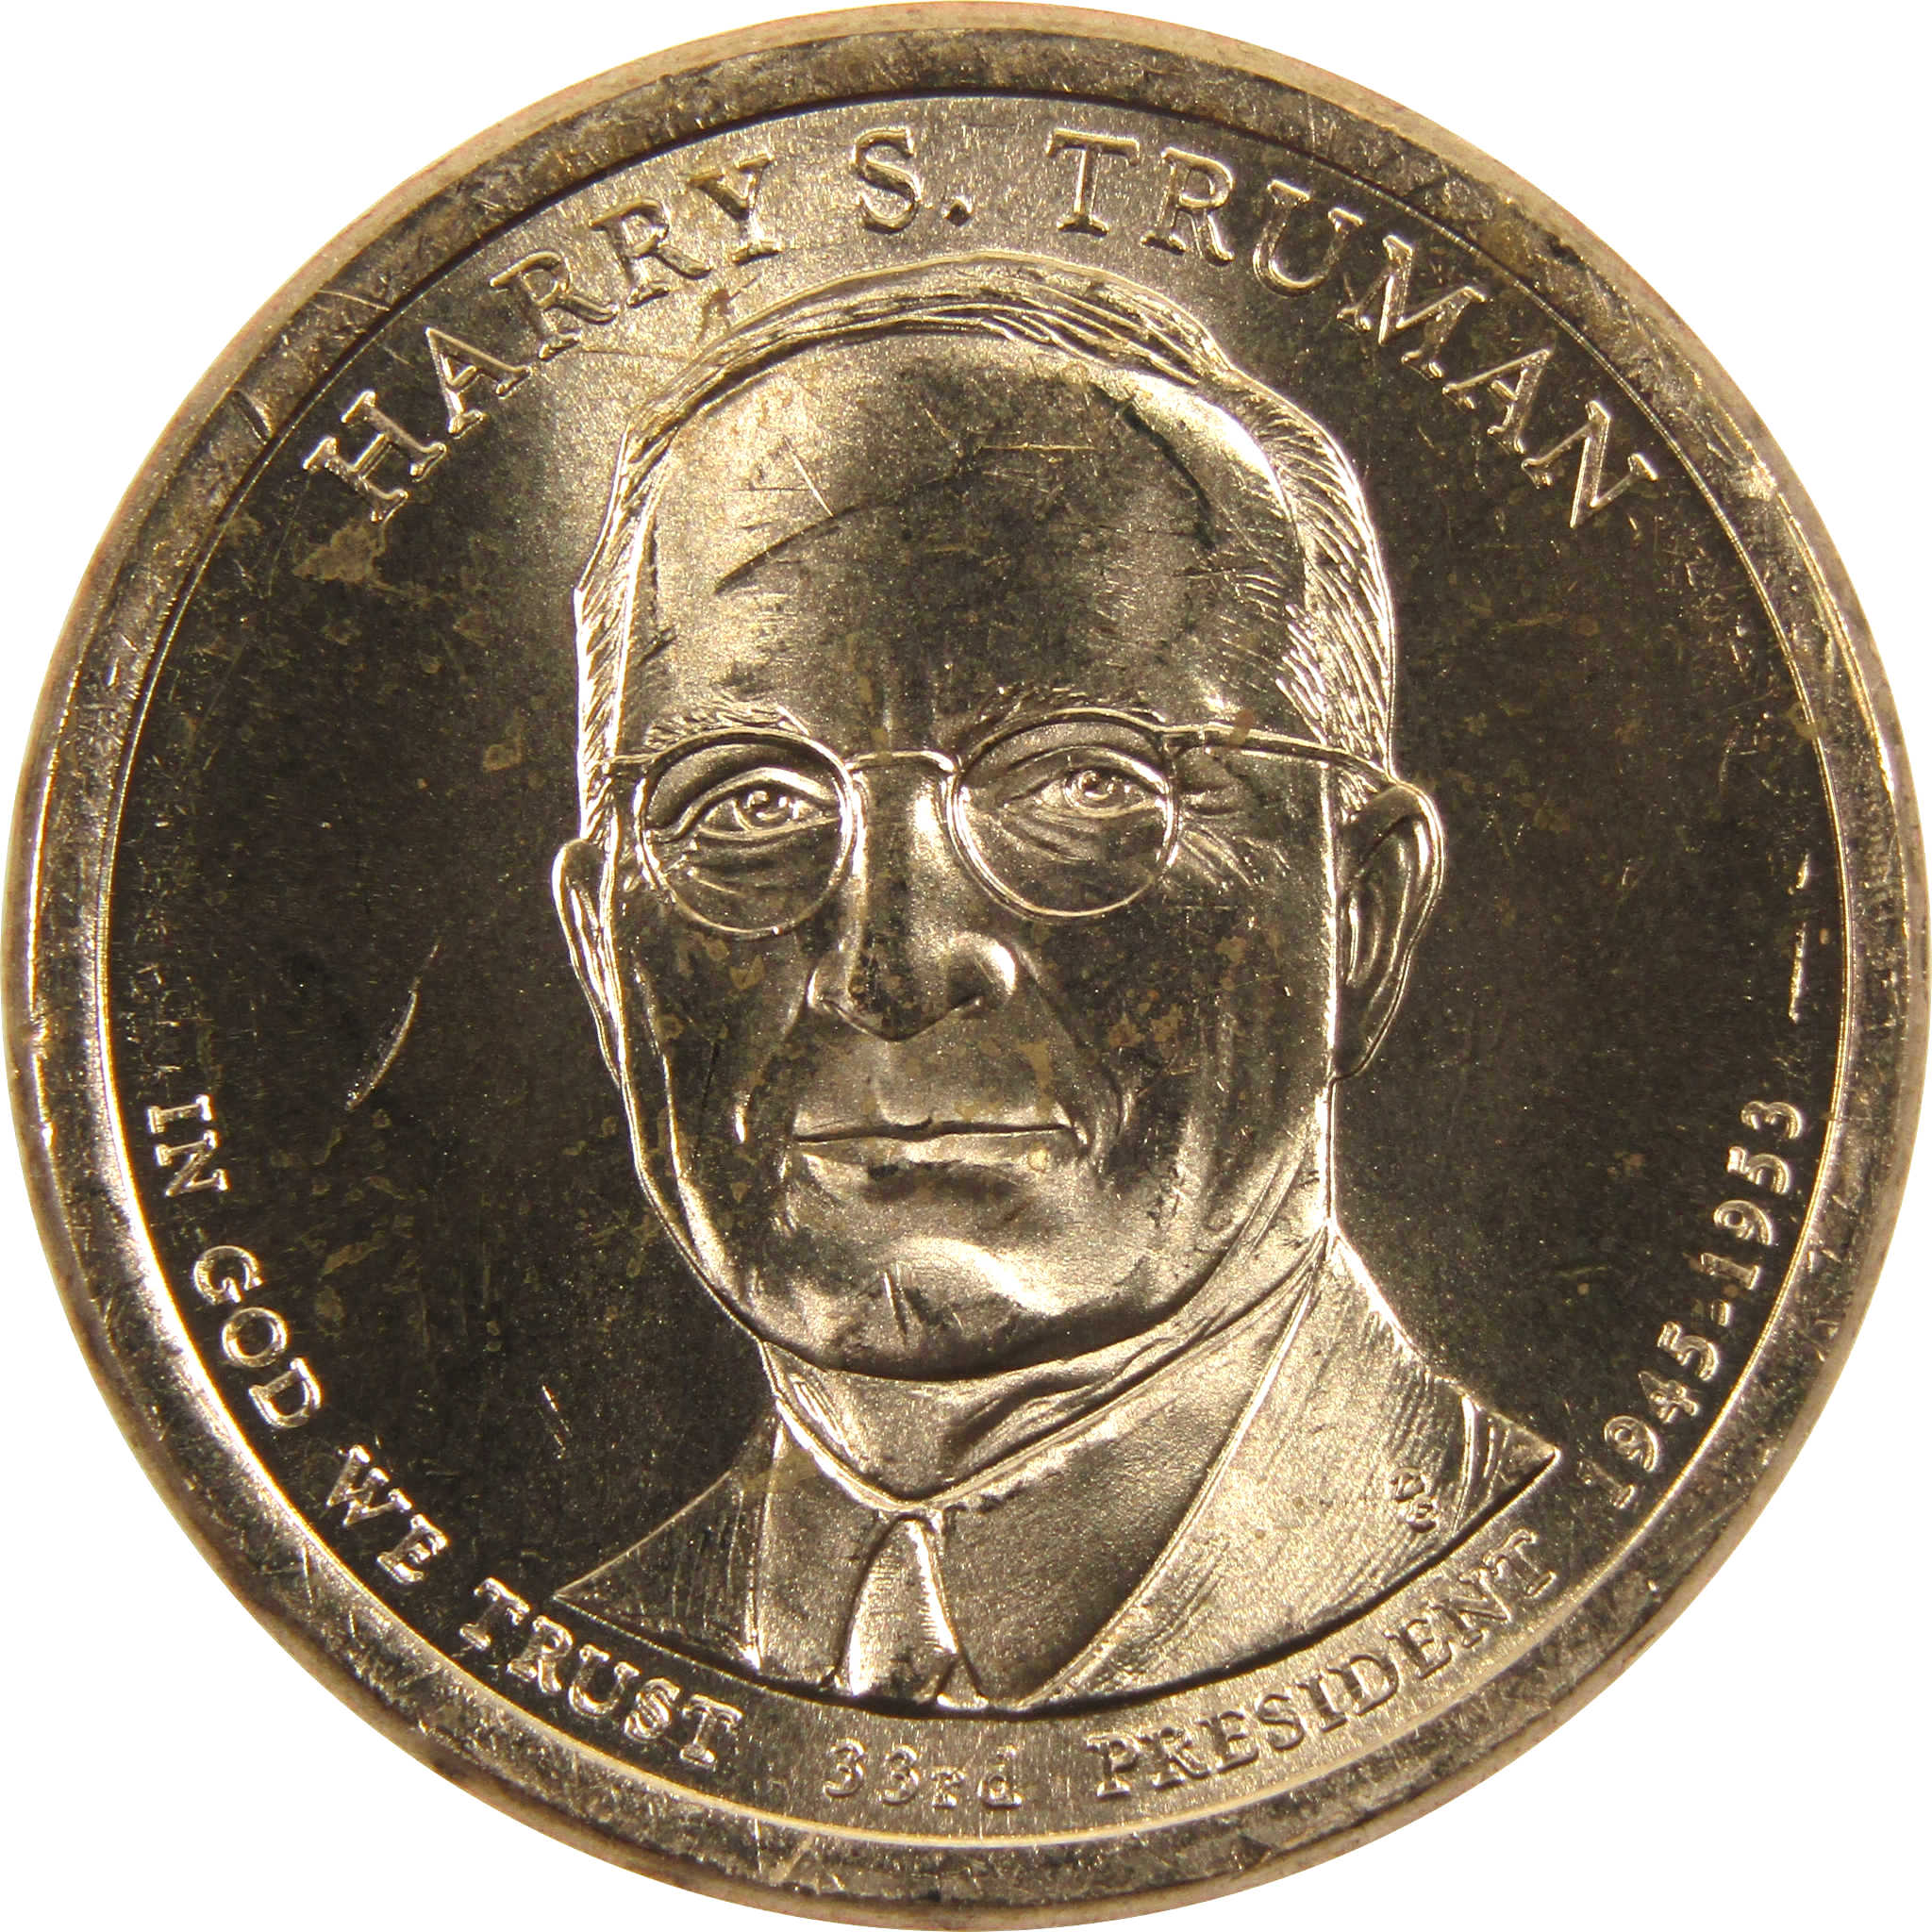 2015 P Harry S Truman Presidential Dollar BU Uncirculated $1 Coin